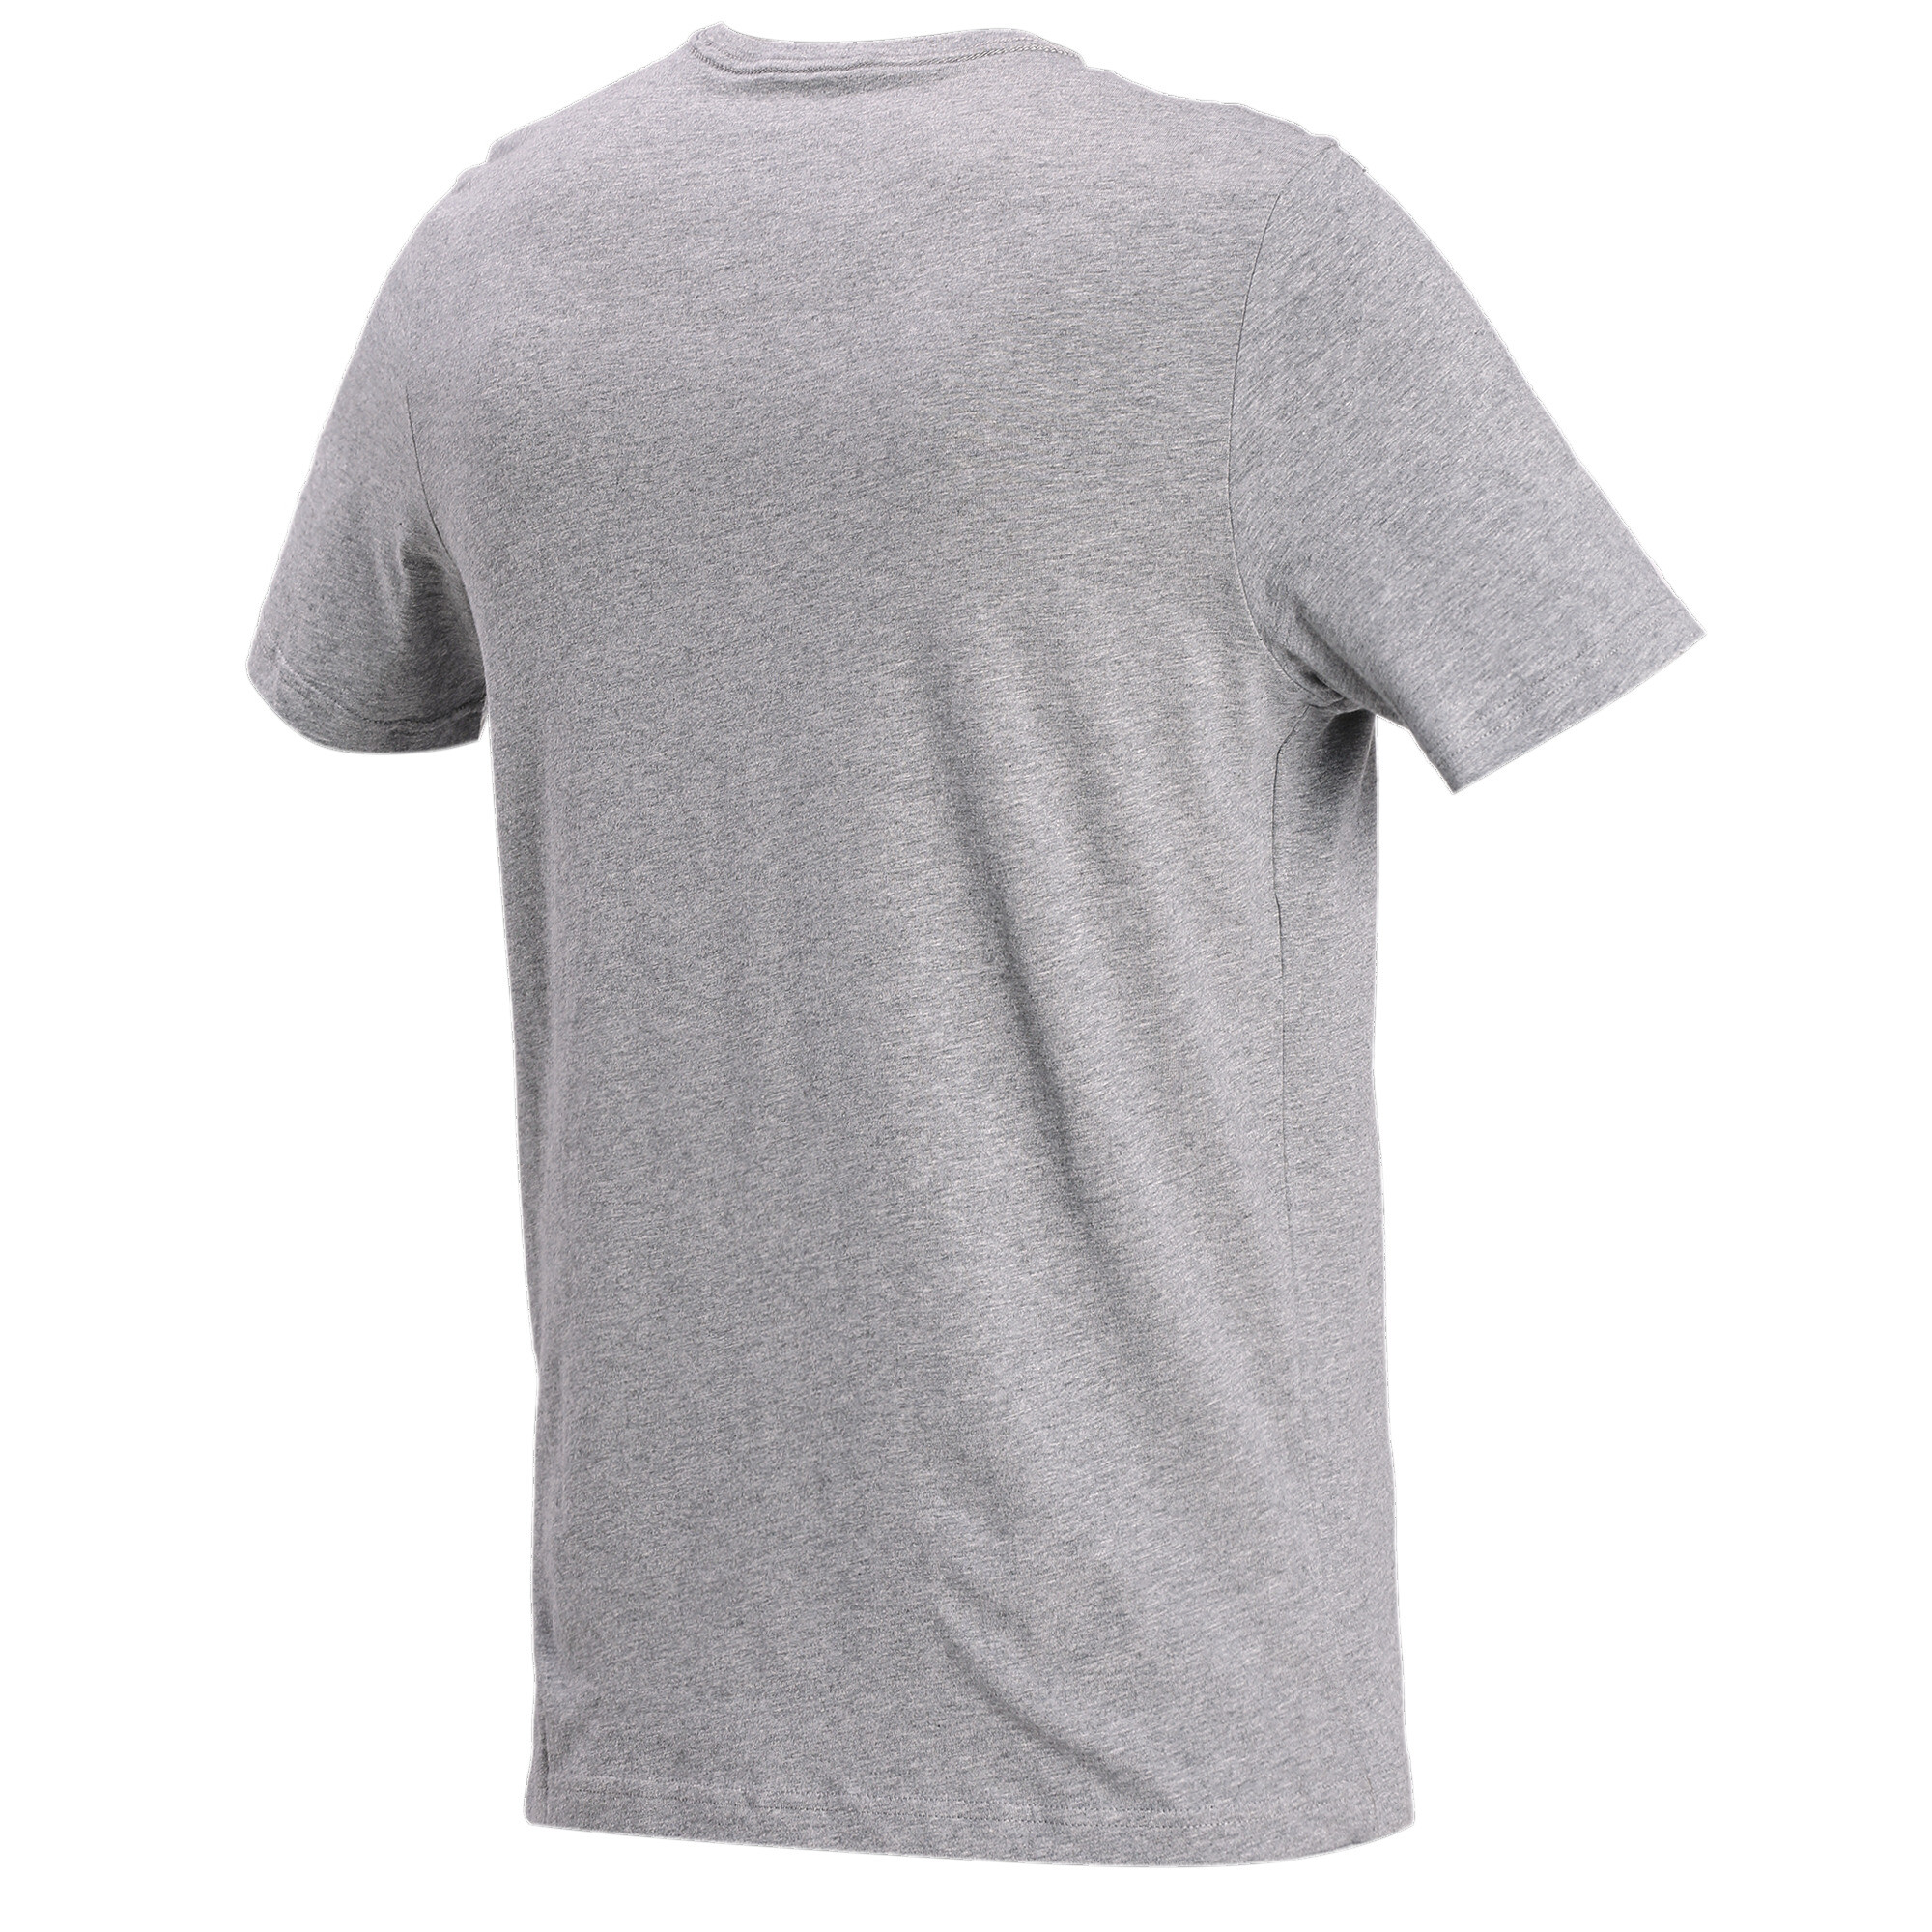 PUMA Essentials Small Logo T-Shirt Tee Top Mens | eBay